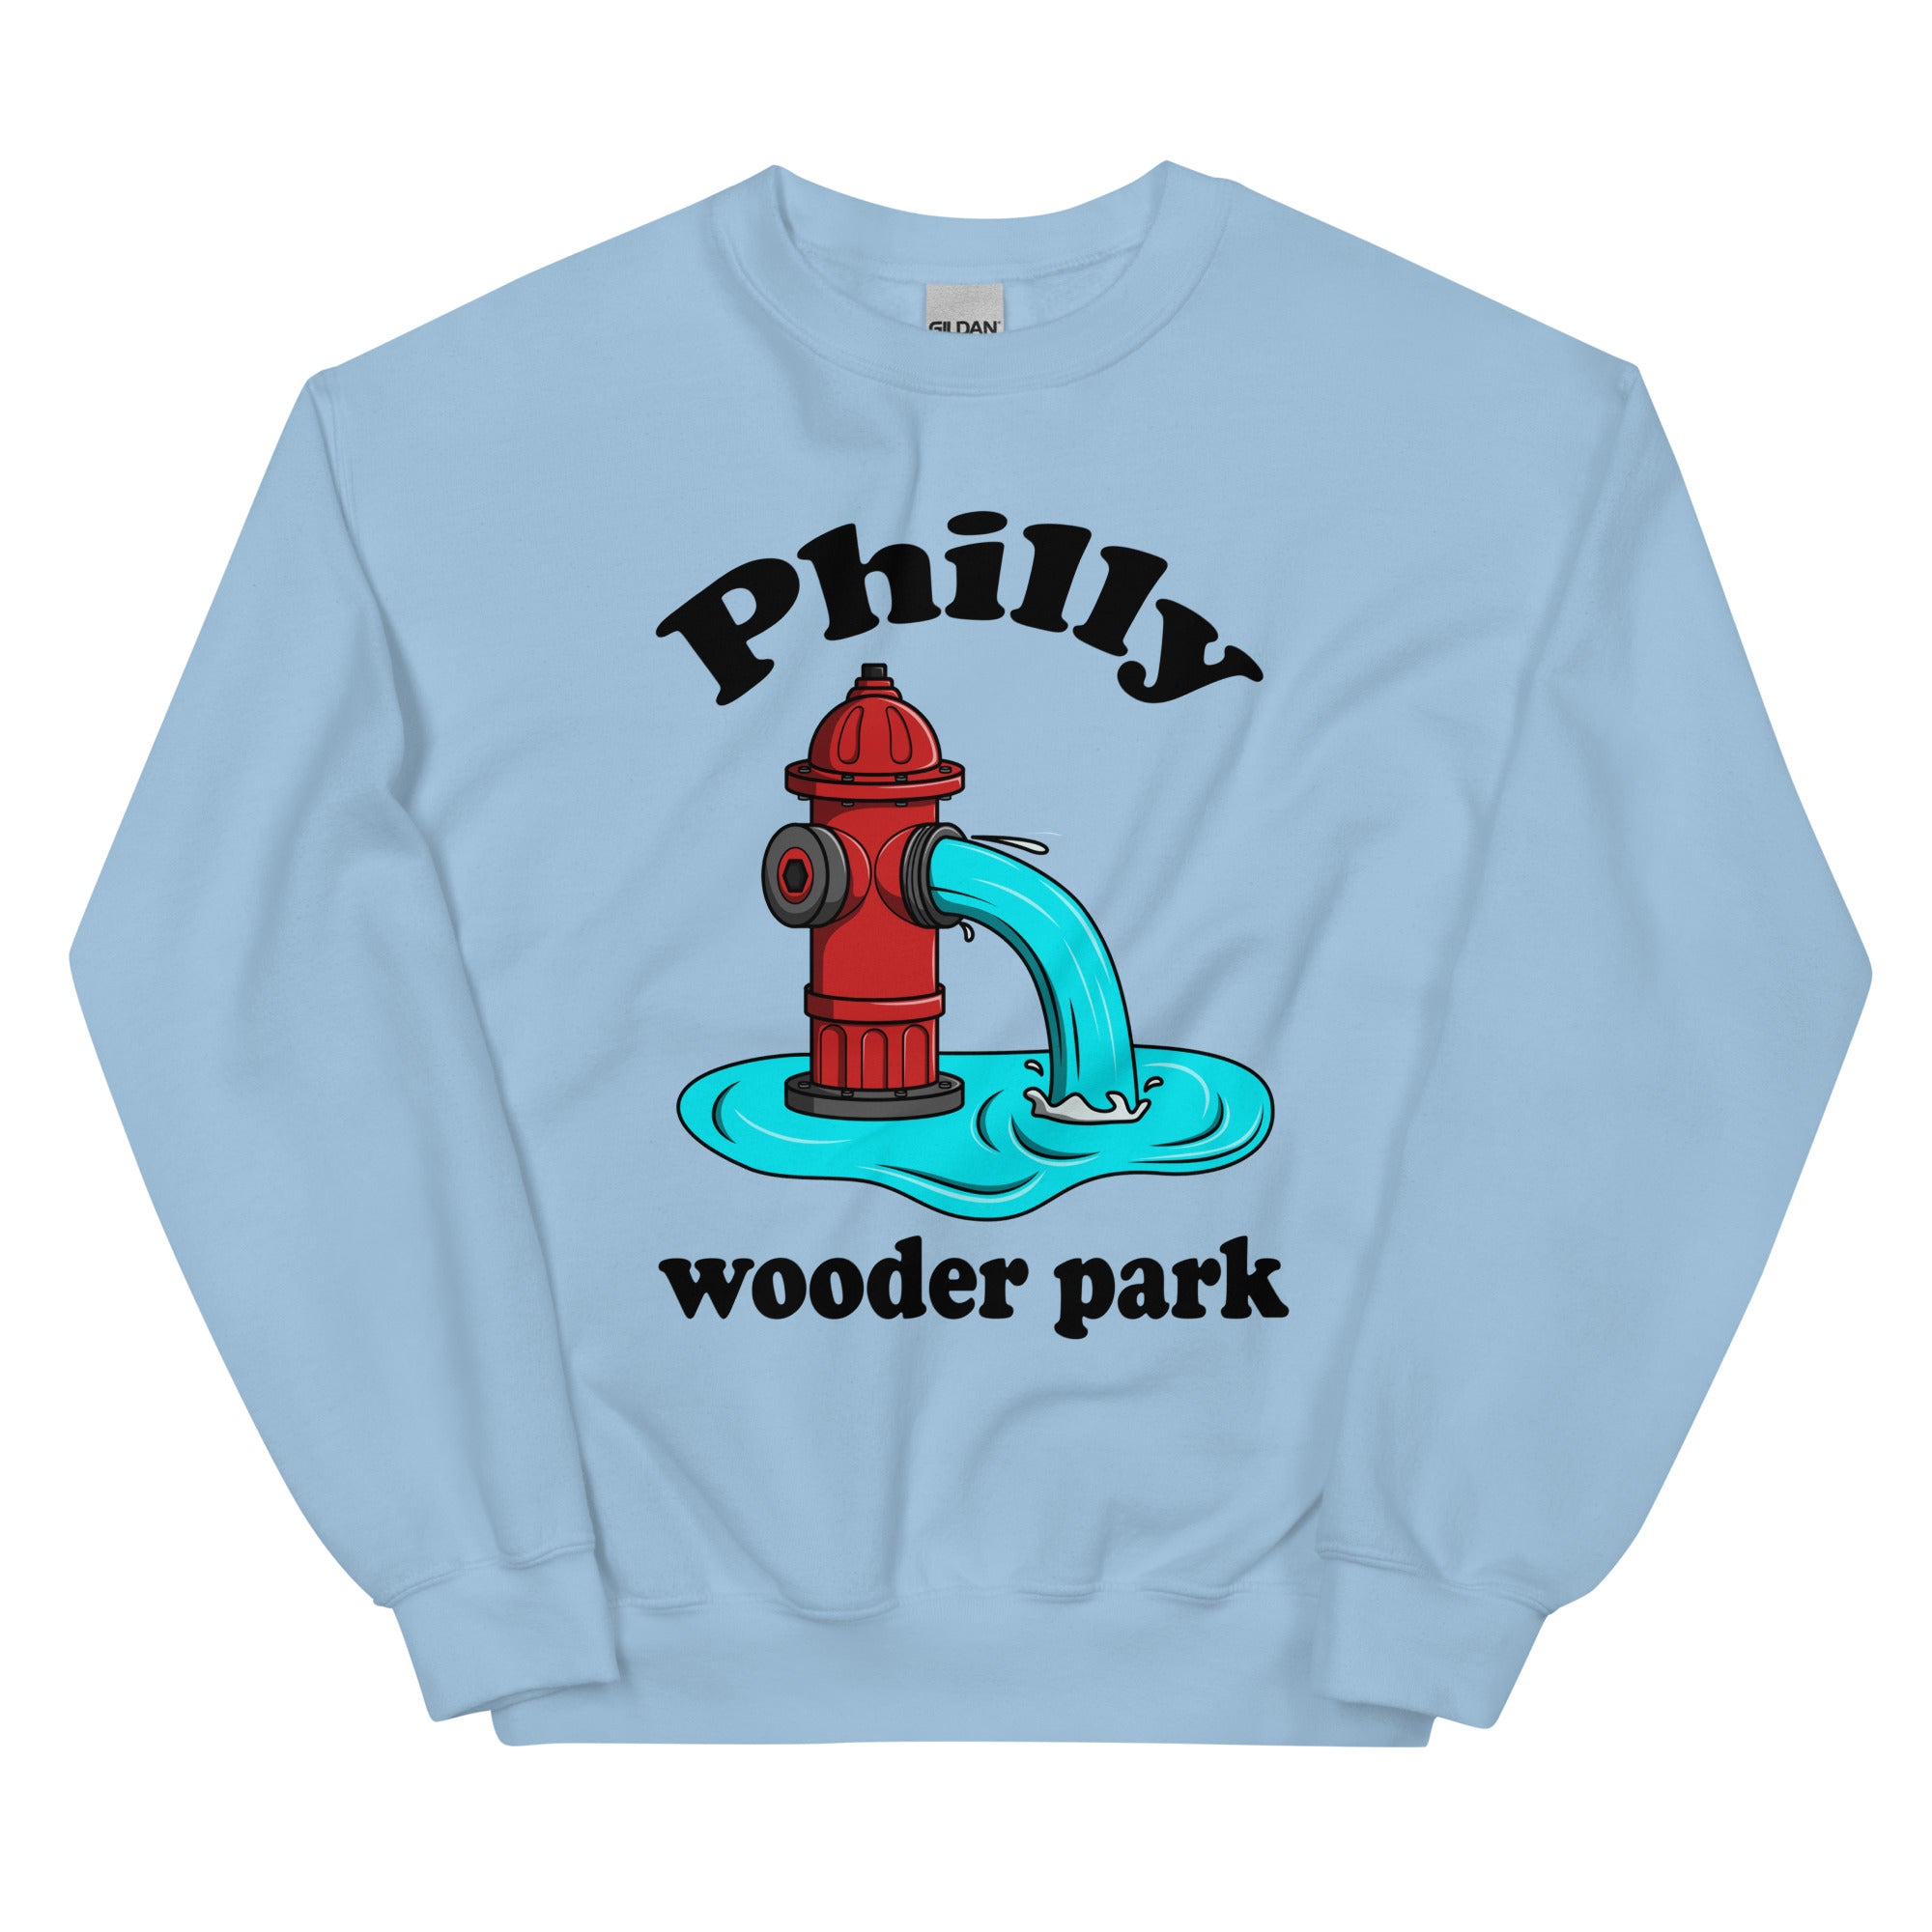 Philadelphia Philly wooder park fire hydrant funny light blue sweatshirt Phillygoat